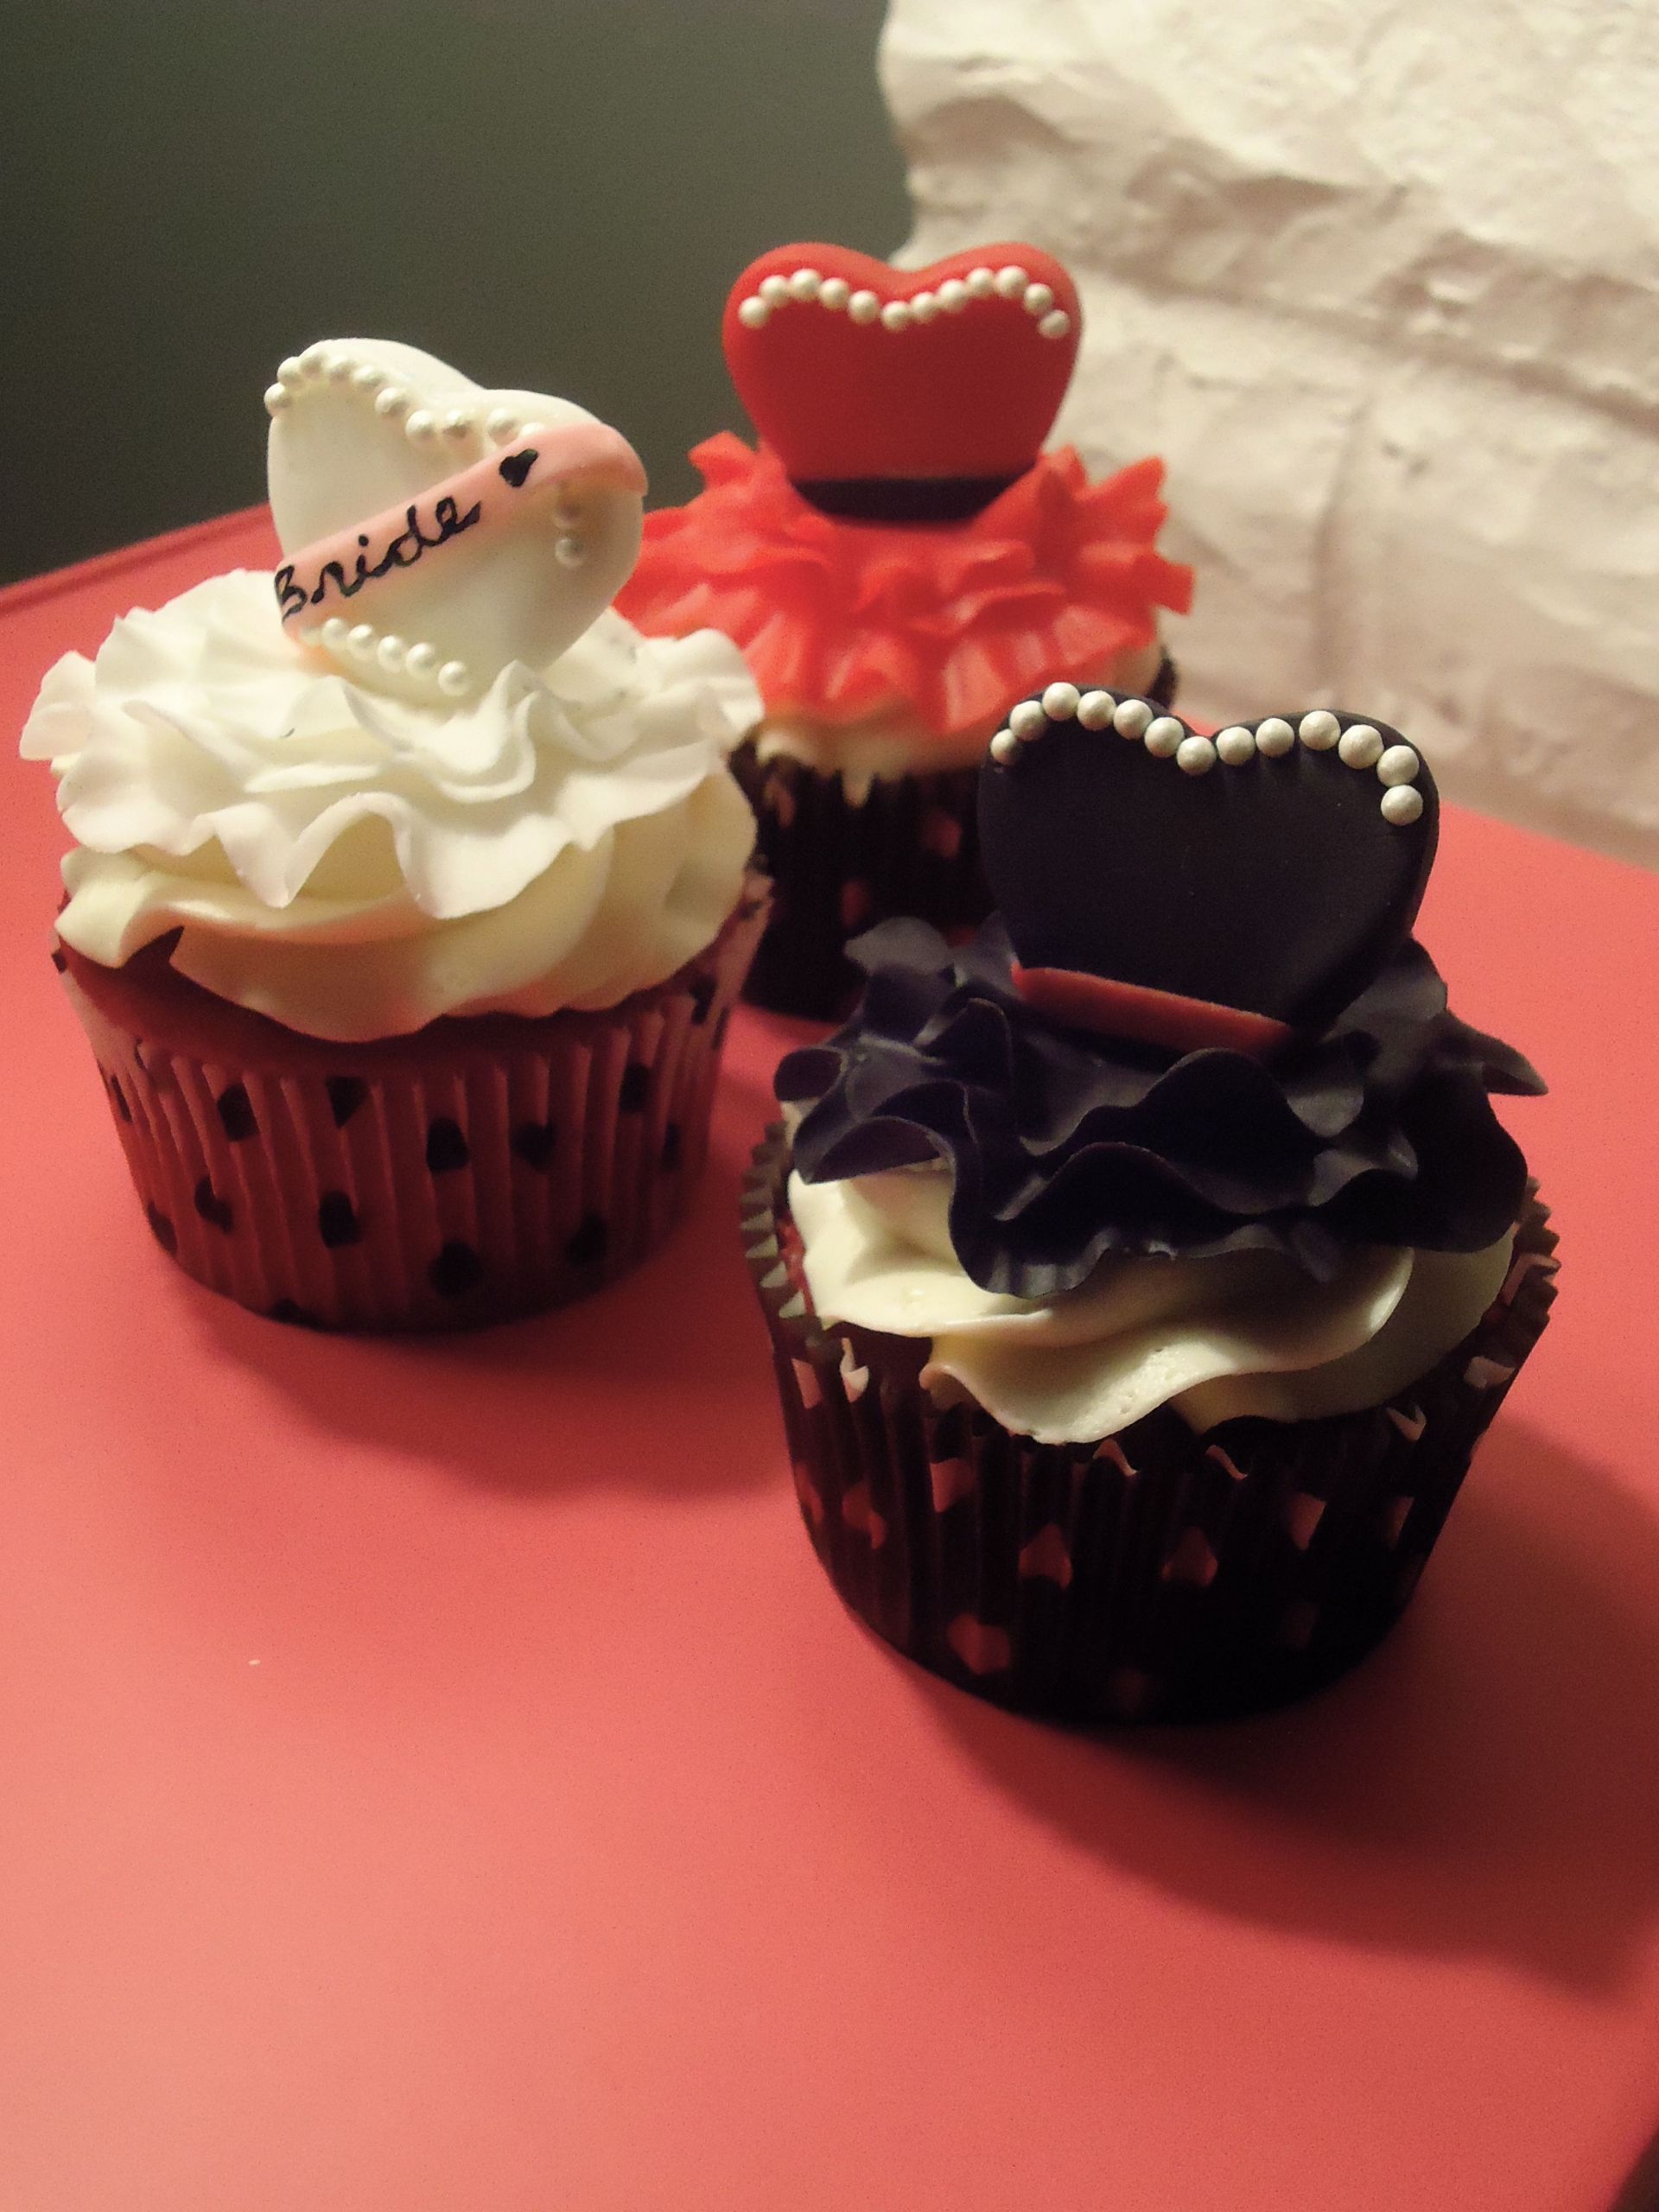 Bachelorette Party Cupcake Ideas
 Bachelorette party cupcakes